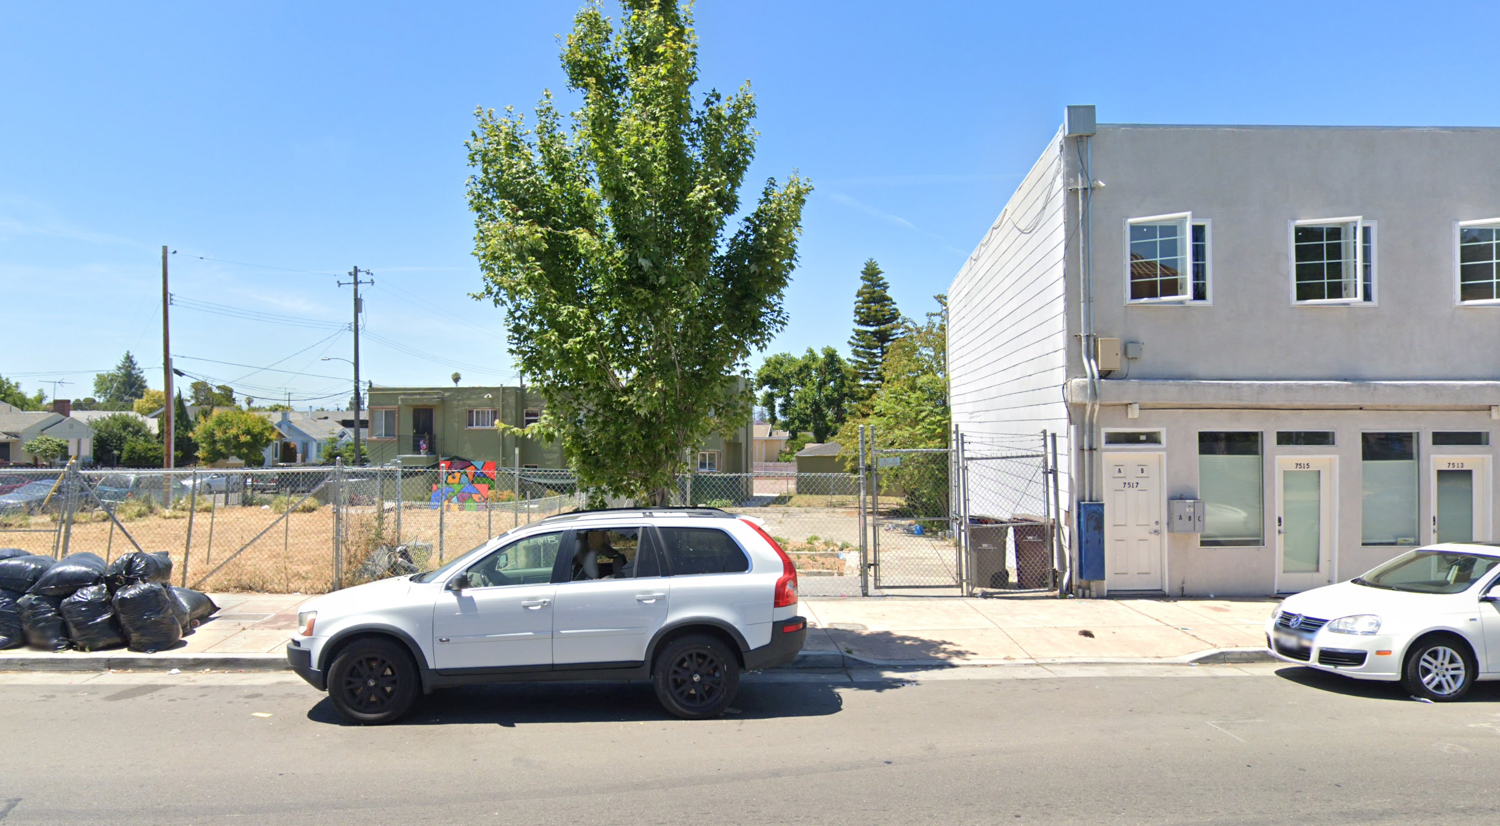 7521 MacArthur Boulevard, image via Google Street View